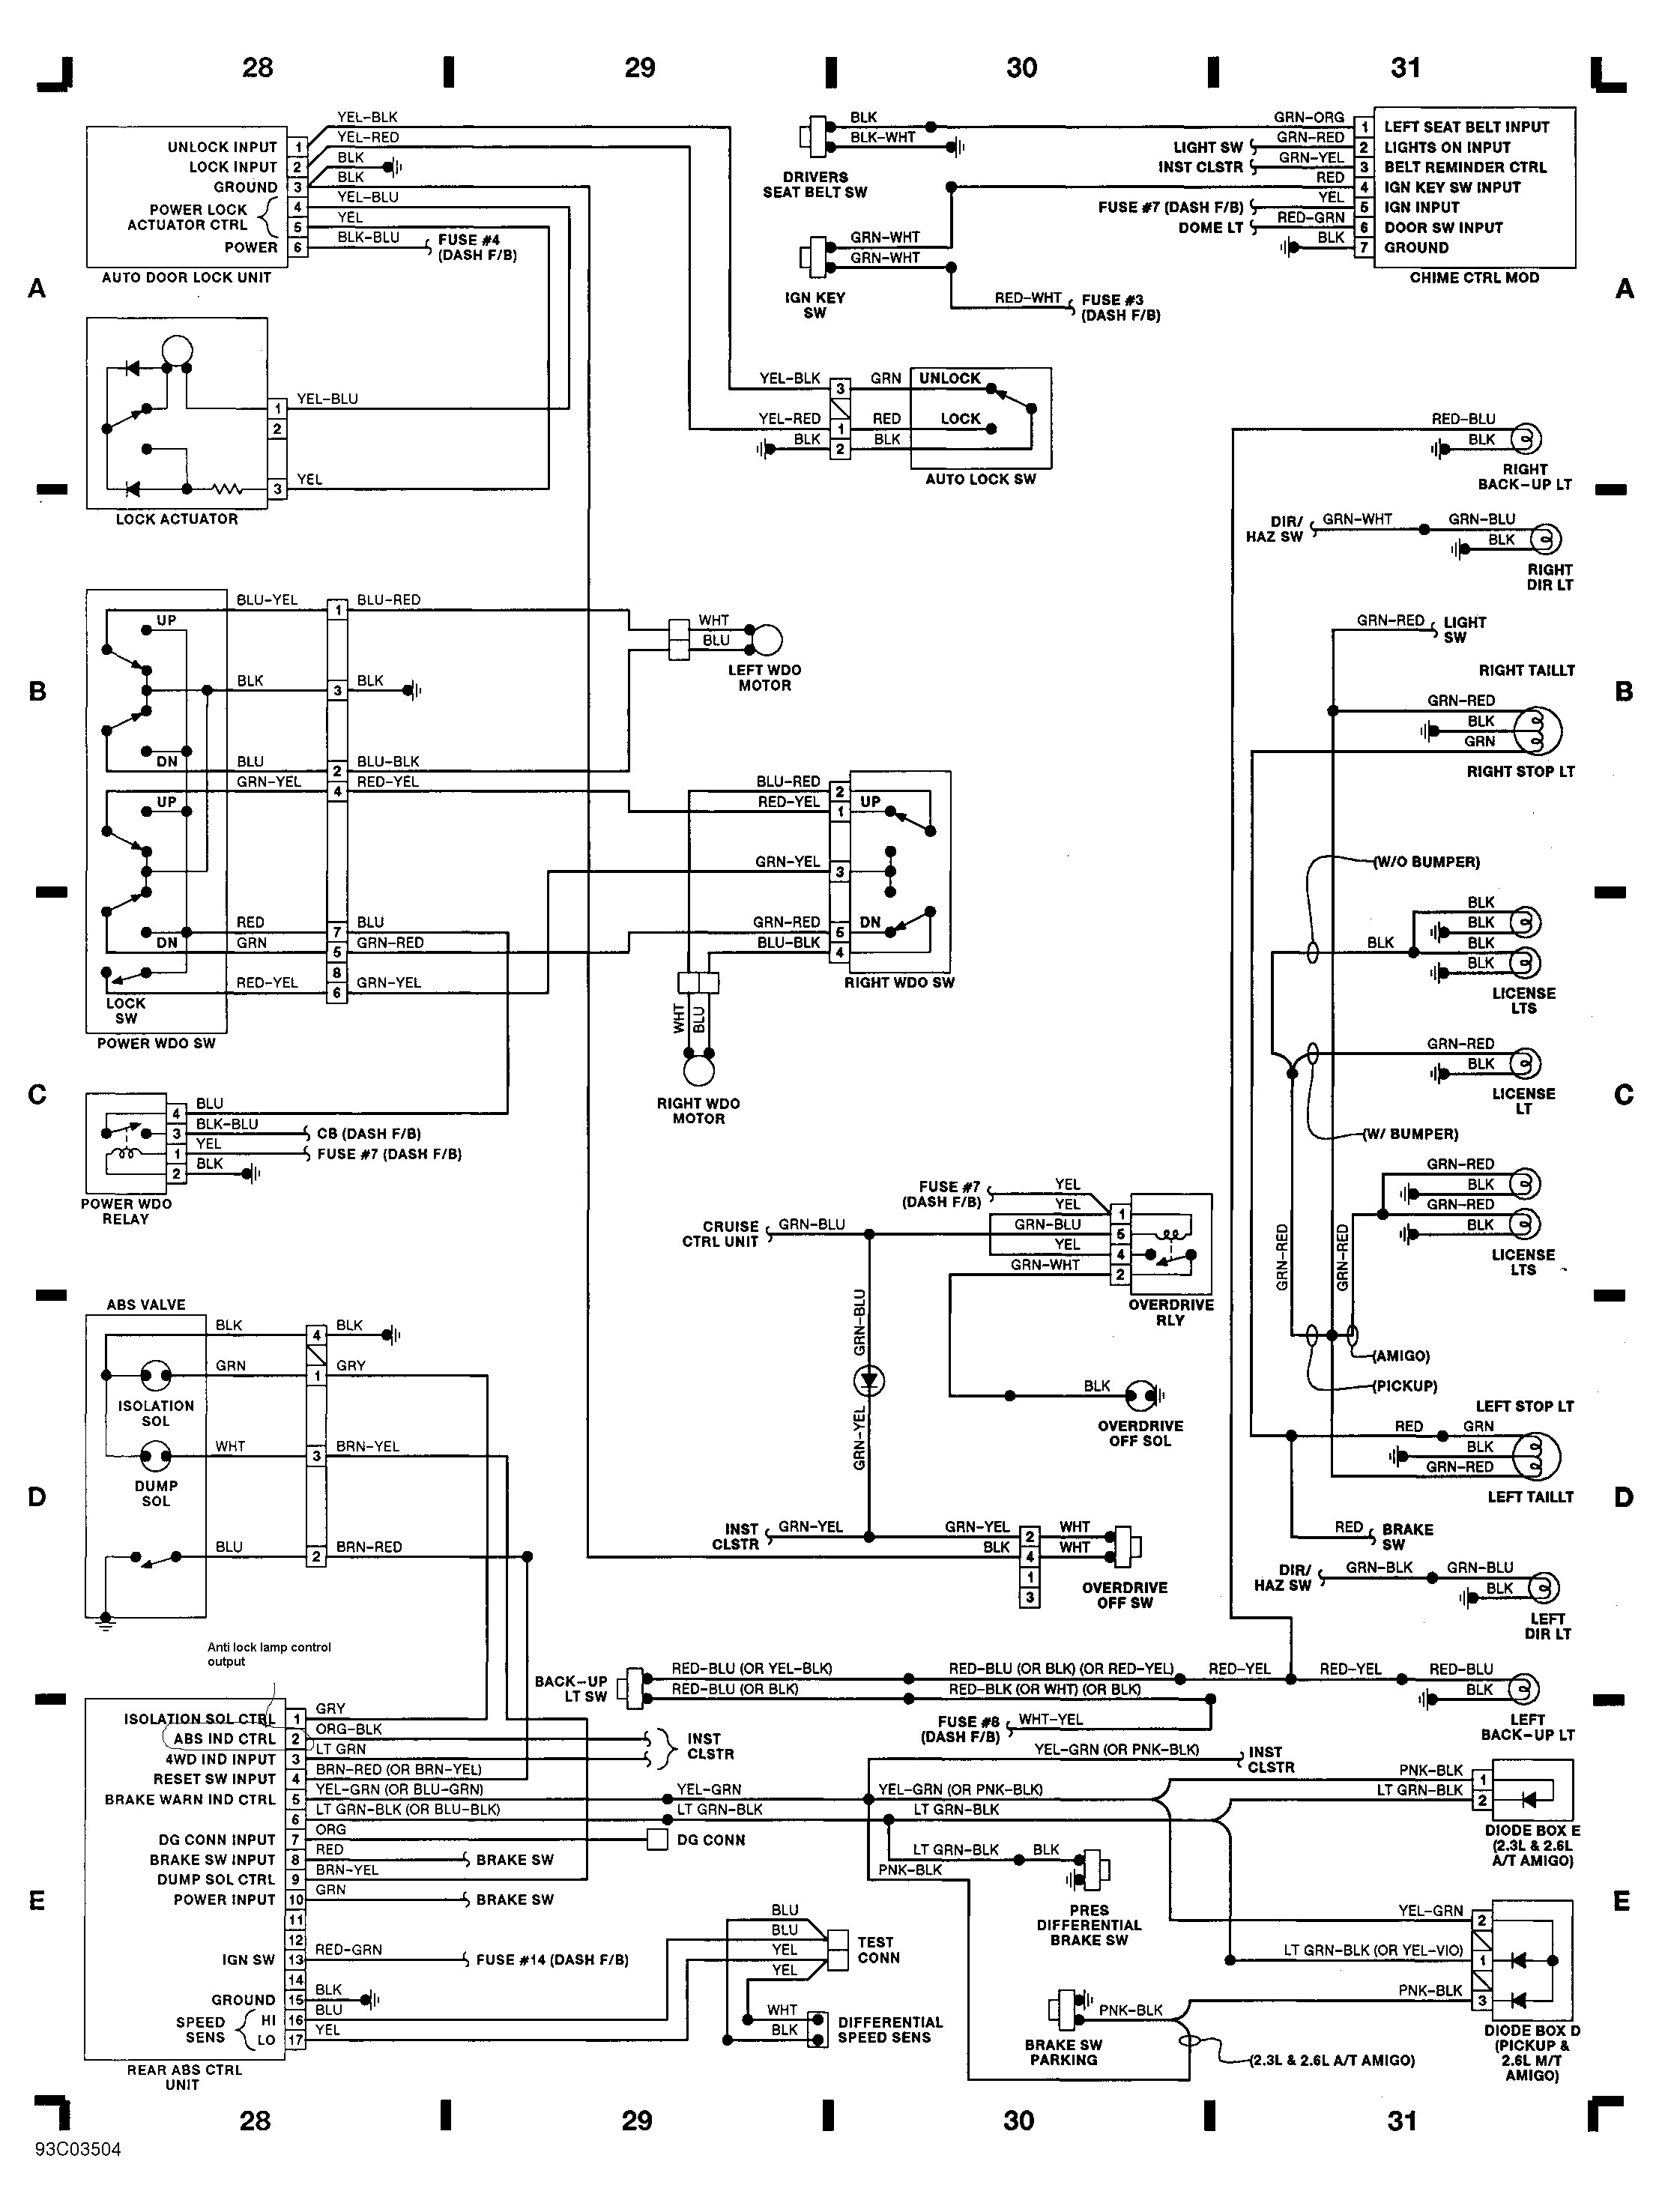 1999 Isuzu Rodeo Fuel Pump Wiring Diagram from detoxicrecenze.com